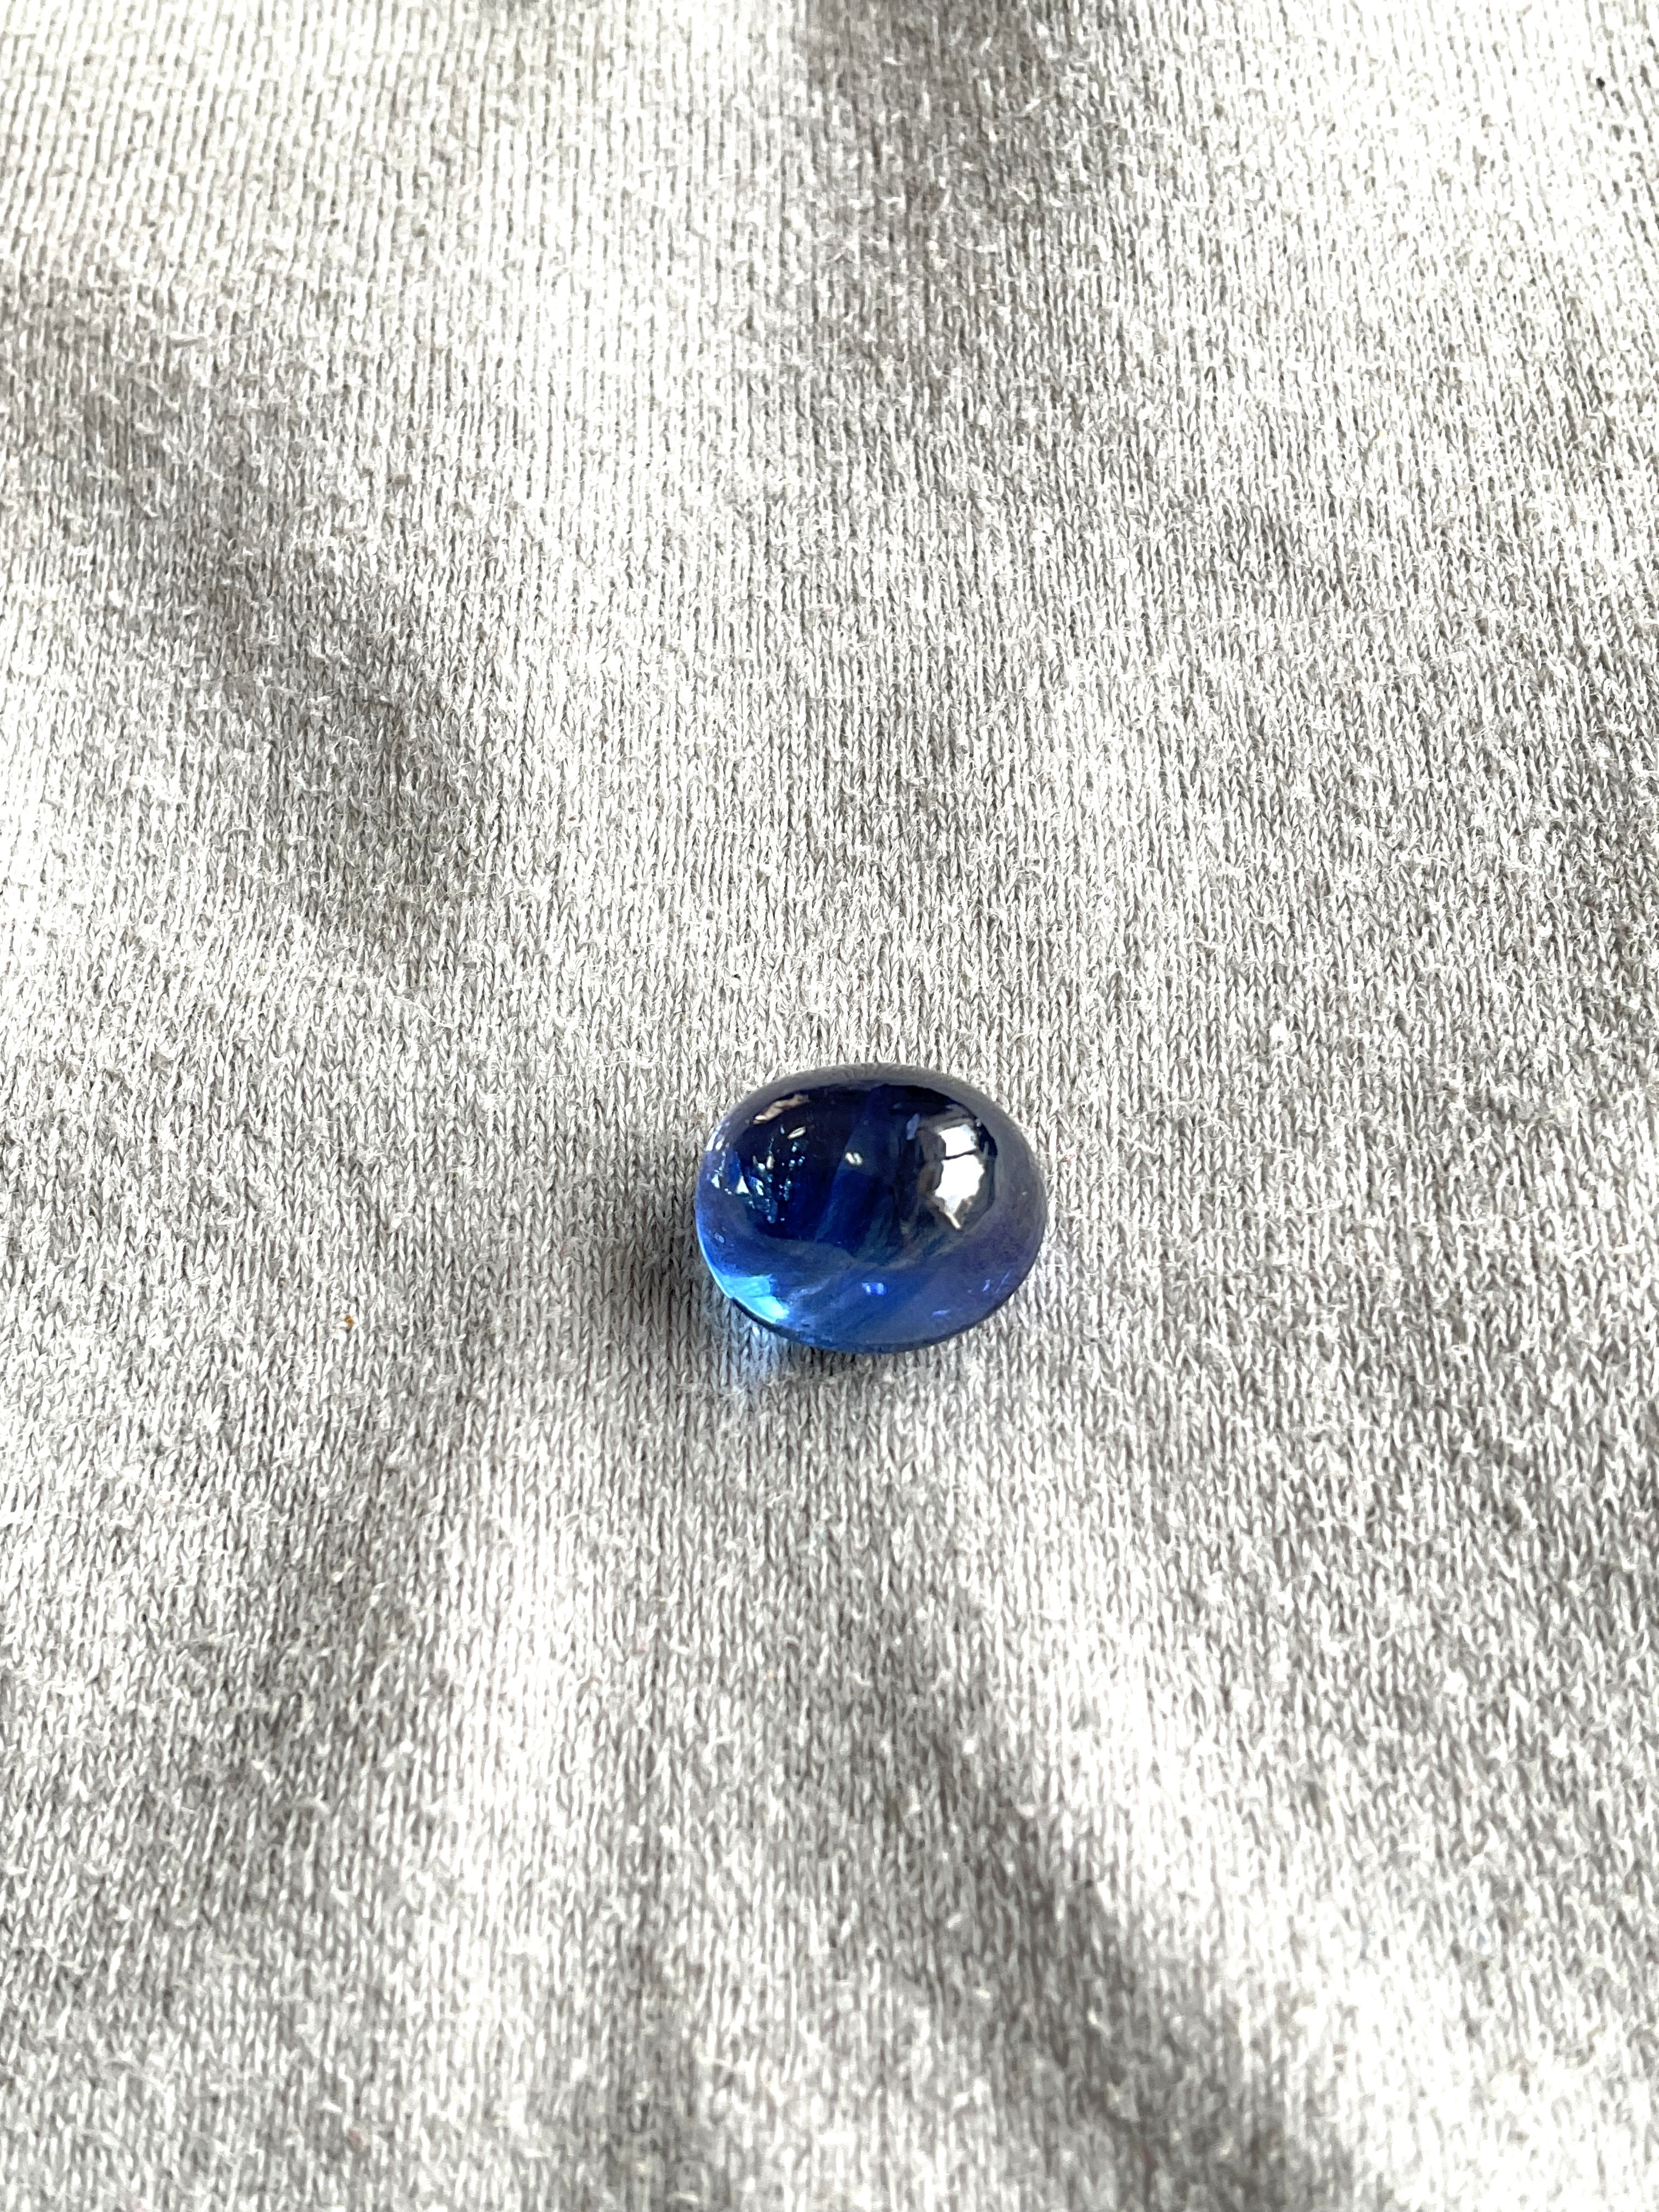 Ceylon Blue Sapphire Cabochon for Fine Jewellery

Gemstone: Blue Sapphire Heated
Type : Ceylon
Shape: cabochon 
Carat weight: 12.83 Carats
Size - 12.76x11.11x8.75